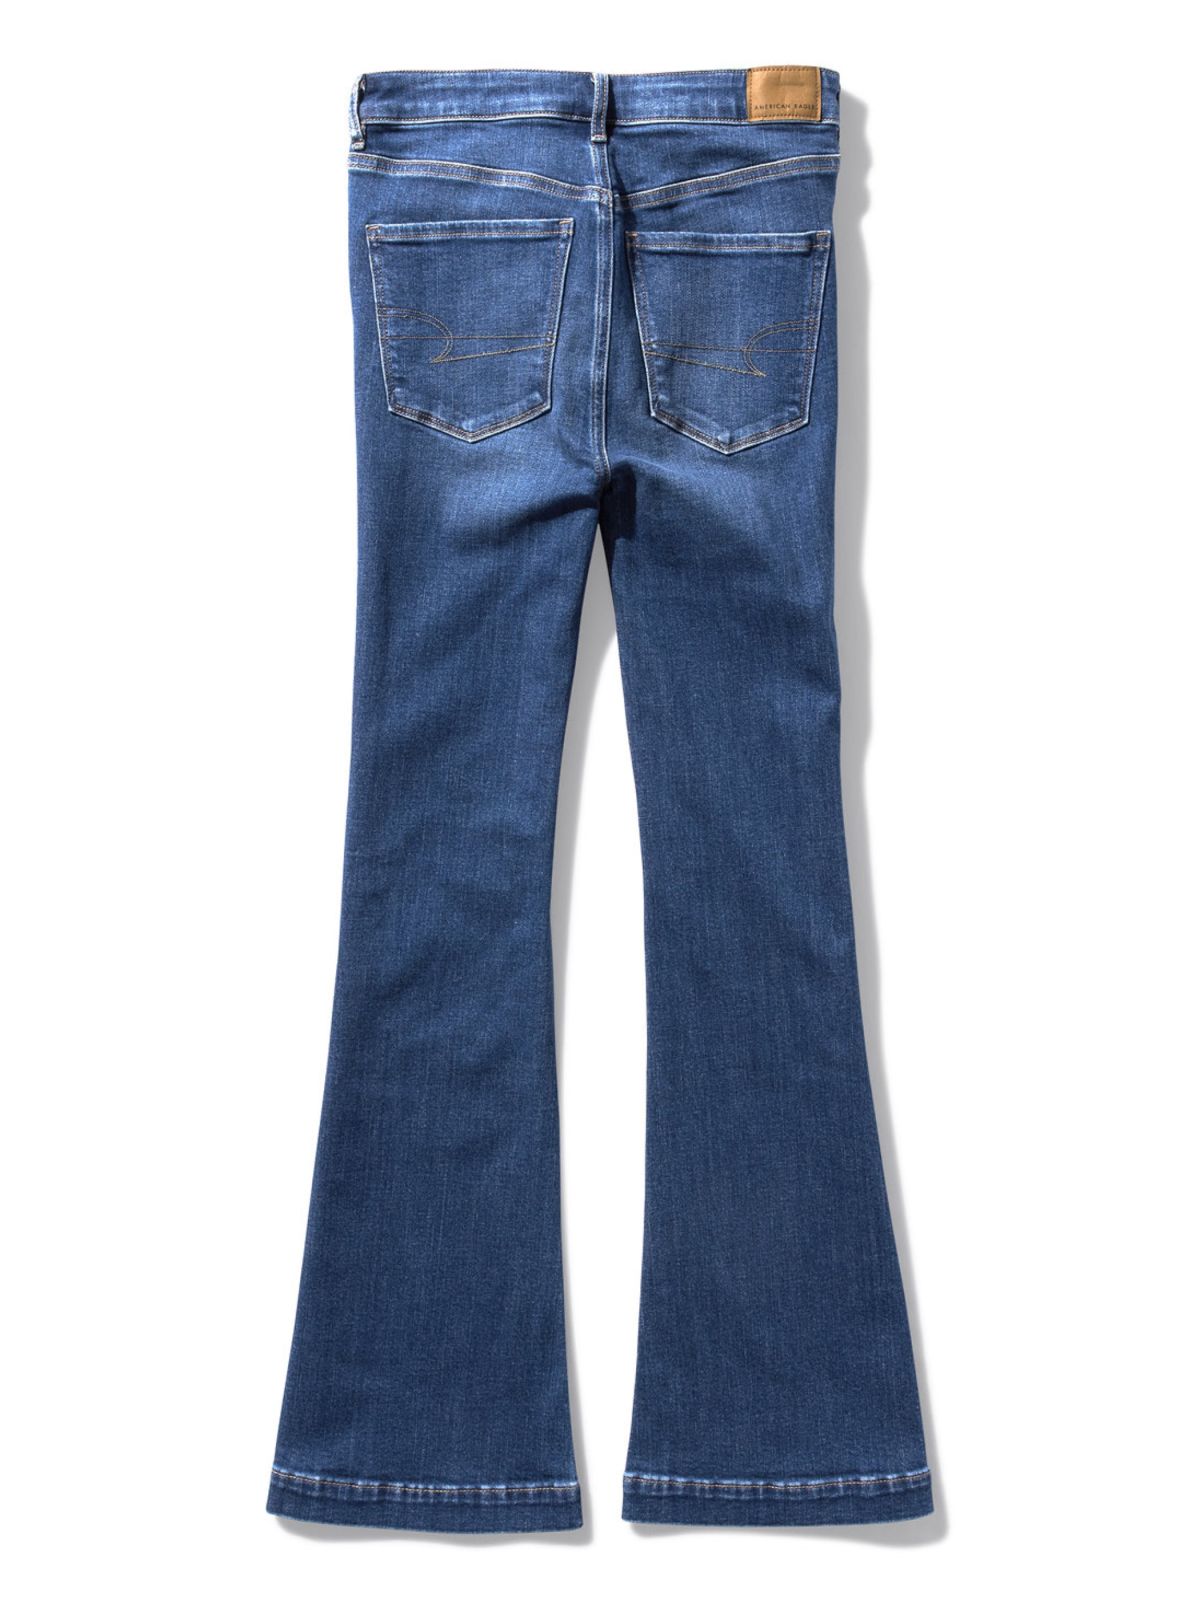  ג'ינס בגזרה מתרחבת Super hi-rise jegging של AMERICAN EAGLE